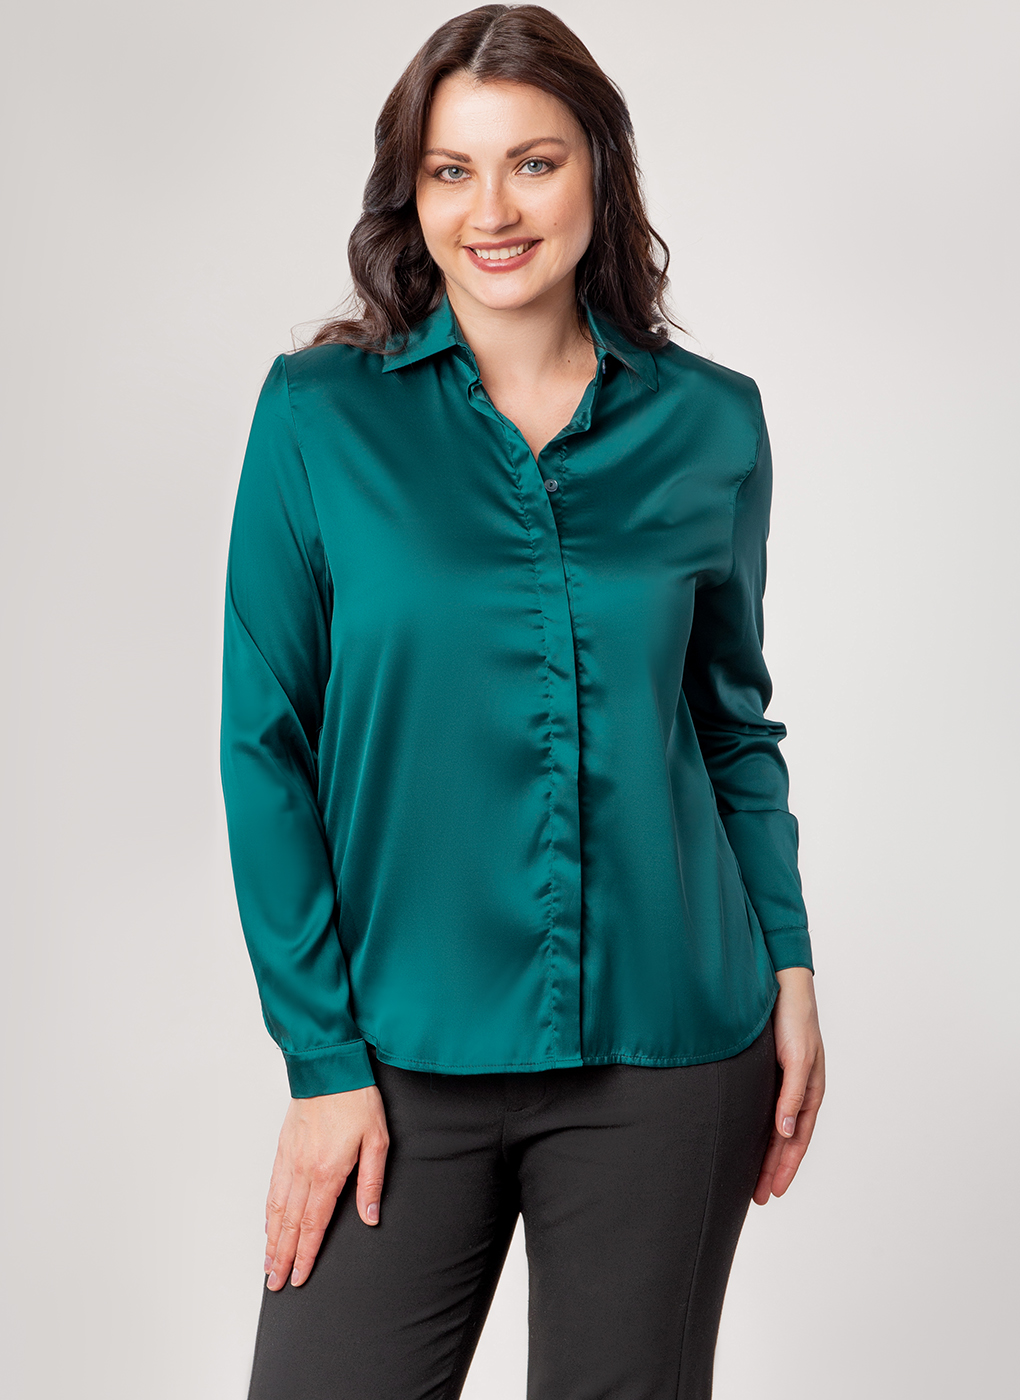 Блуза женская SCANDZA 61656 зеленая 54 RU